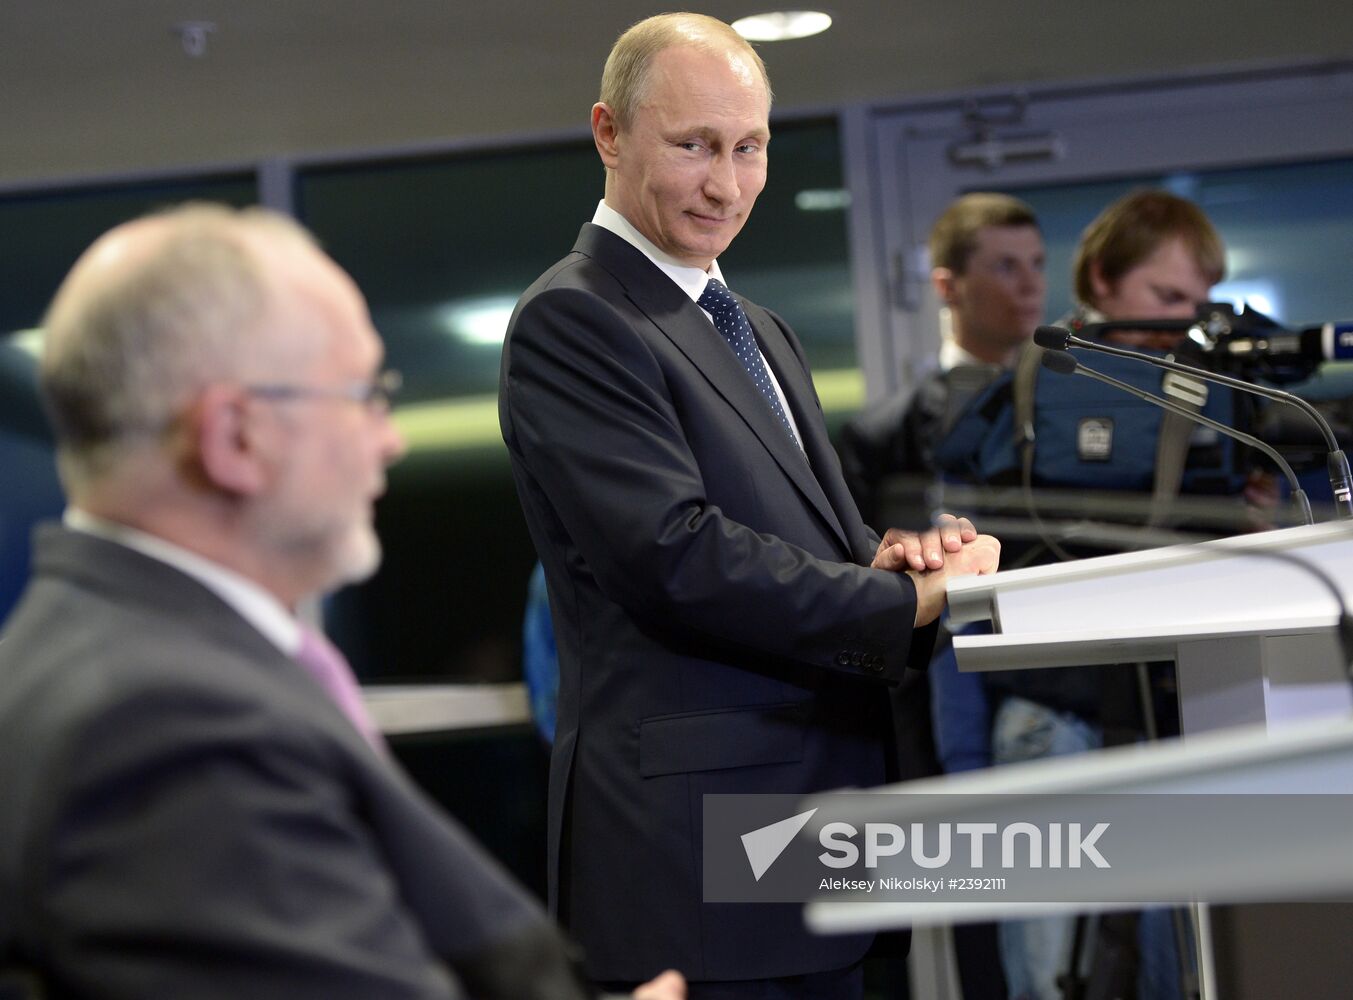 Vladimir Putin meets with International Paralympic Committee board members